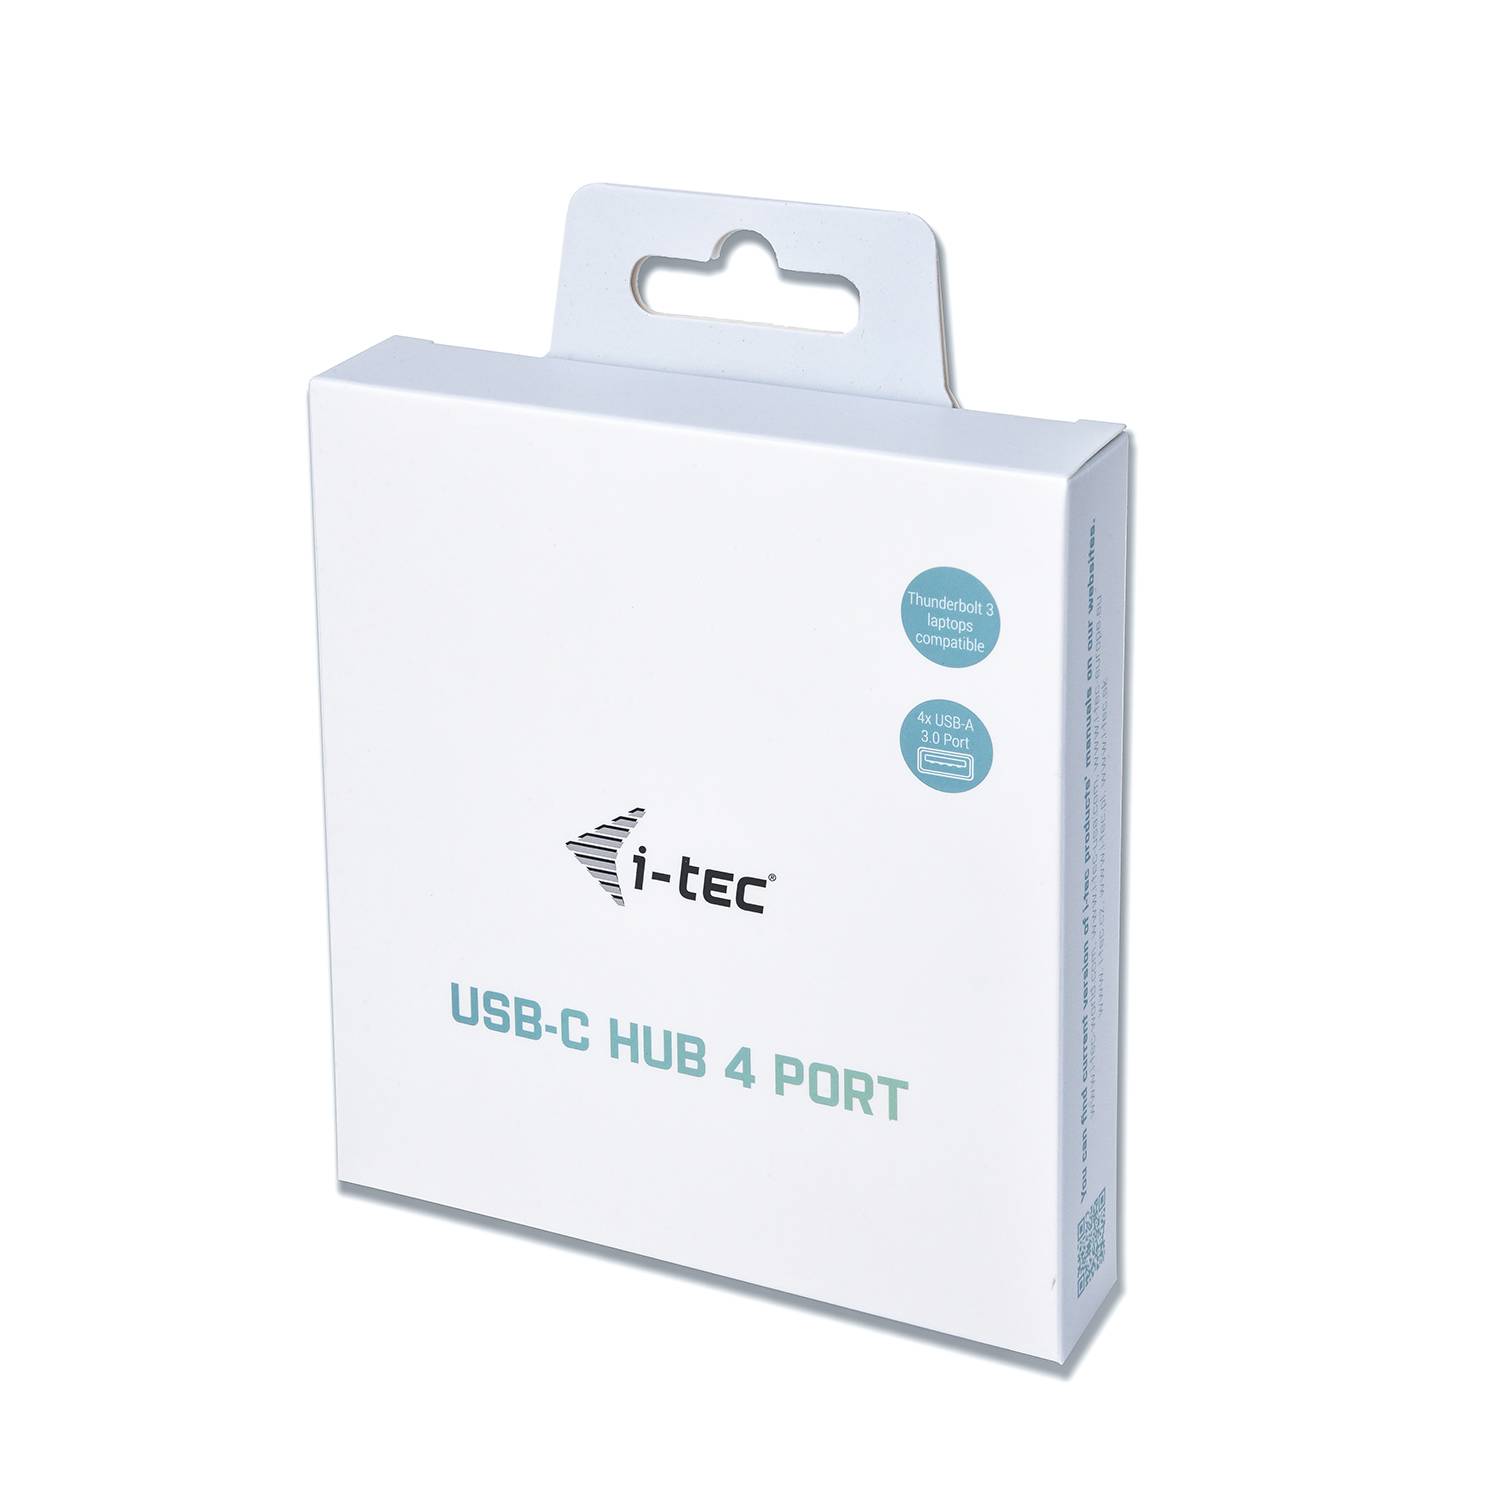 Rca Informatique - image du produit : I-TEC USB-C METAL 4-PORT HUB I-TEC USB-C METAL 4-PORT HUB